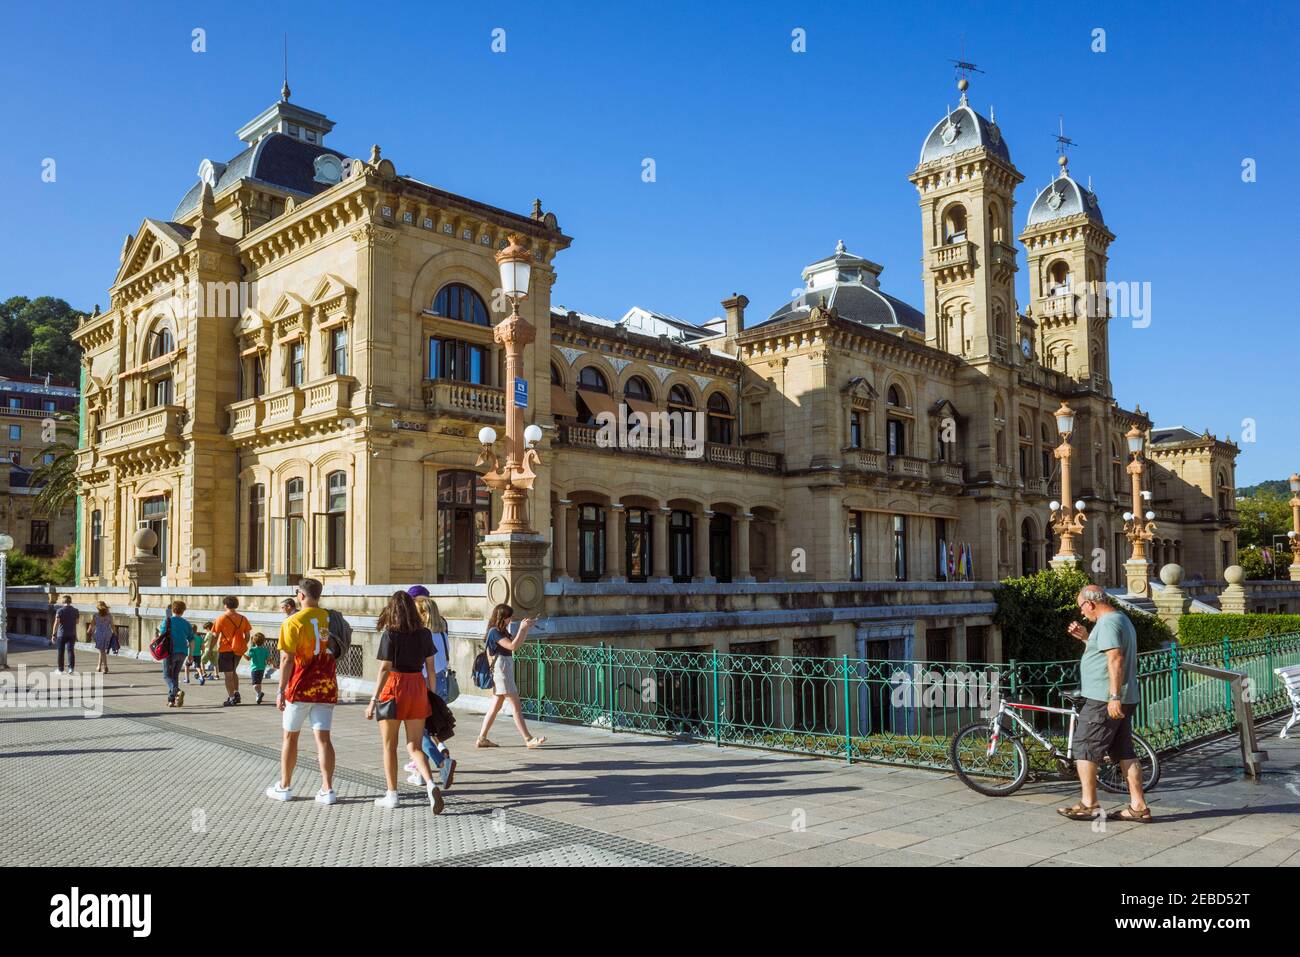 San Sebastian, Gipuzkoa, Basque Country, Spain - July 15th, 2019 : People walk past the San Sebastian city hall originally built in 1887 to house the Stock Photo